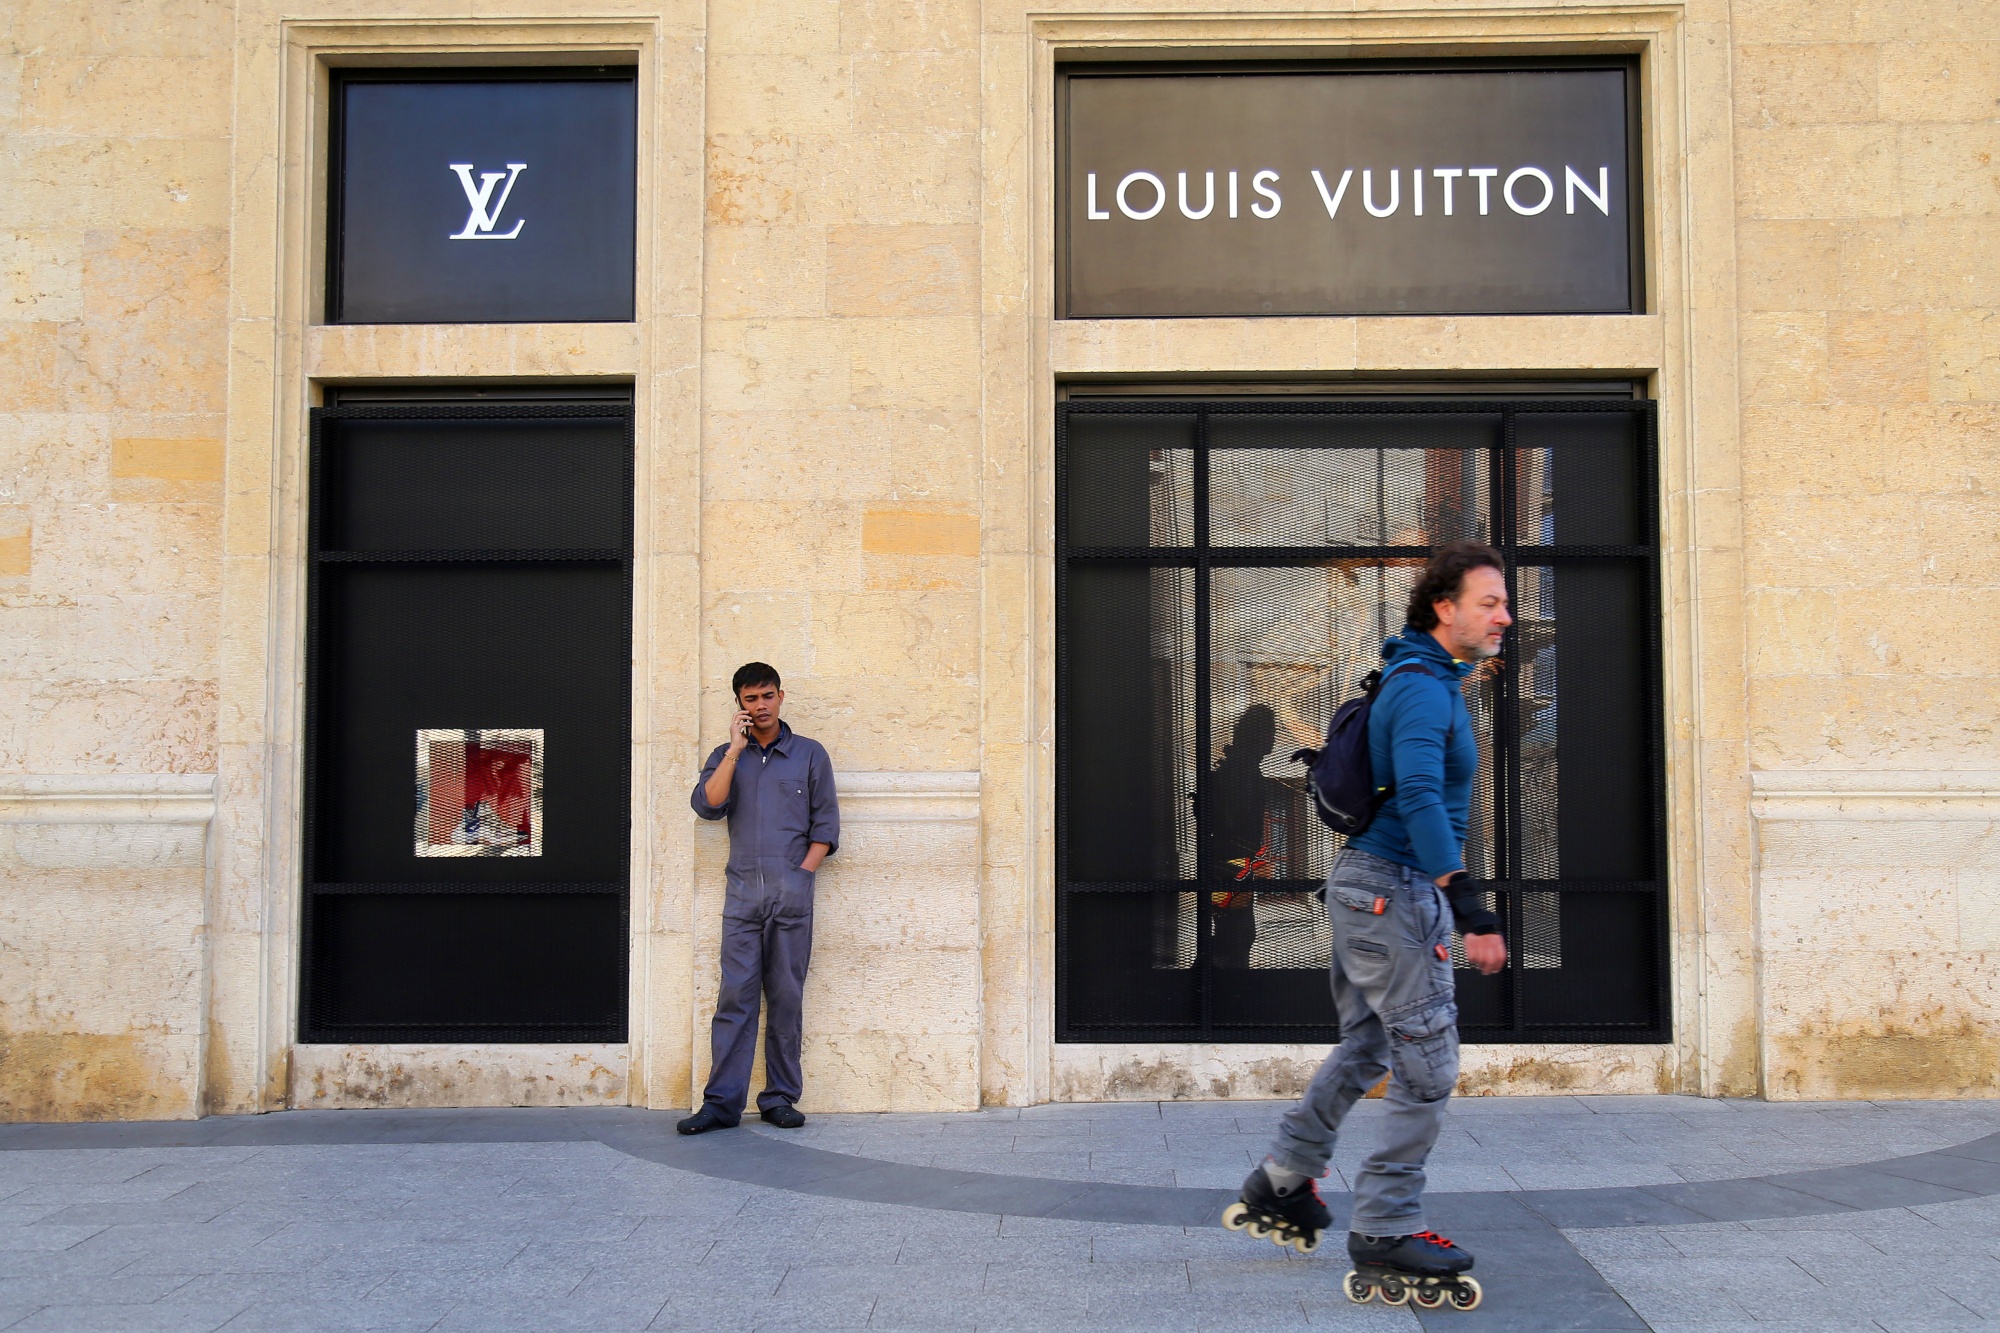 Drive, skate, vote: Vuitton closes Paris Fashion Week with slogans